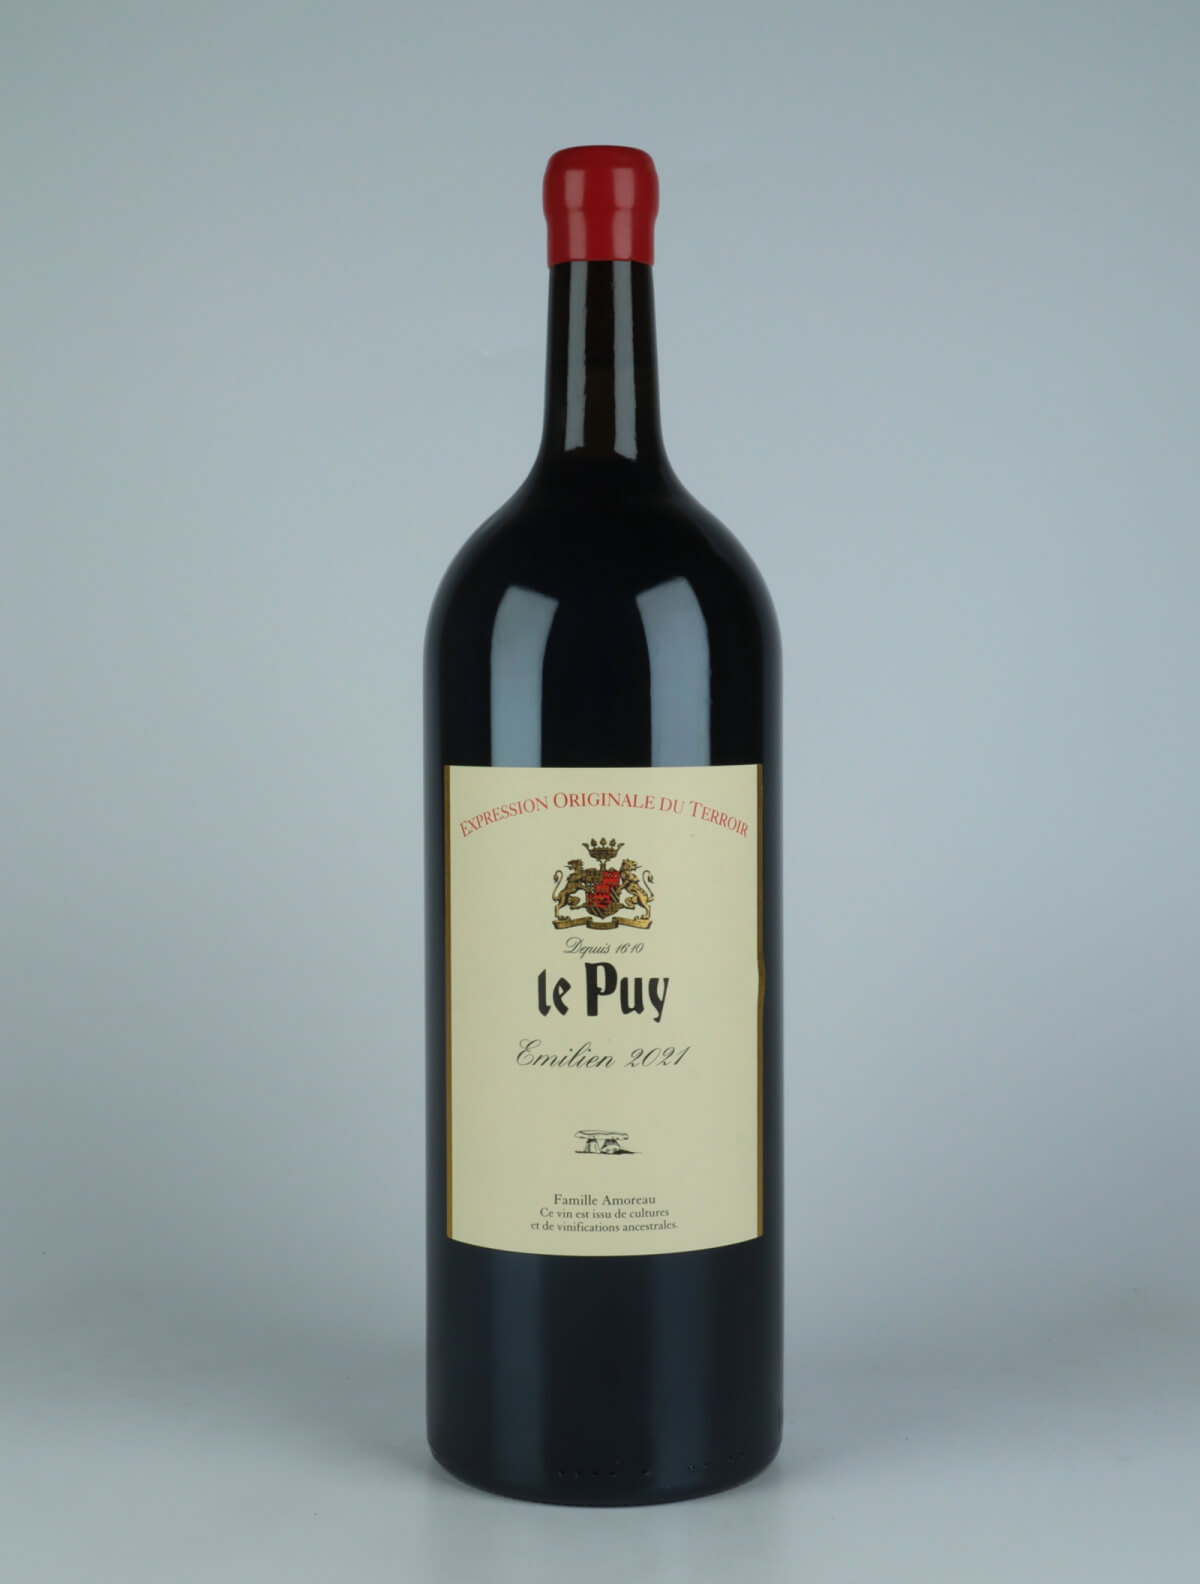 A bottle 2021 Emilien - Magnum Red wine from Château le Puy, Bordeaux in France